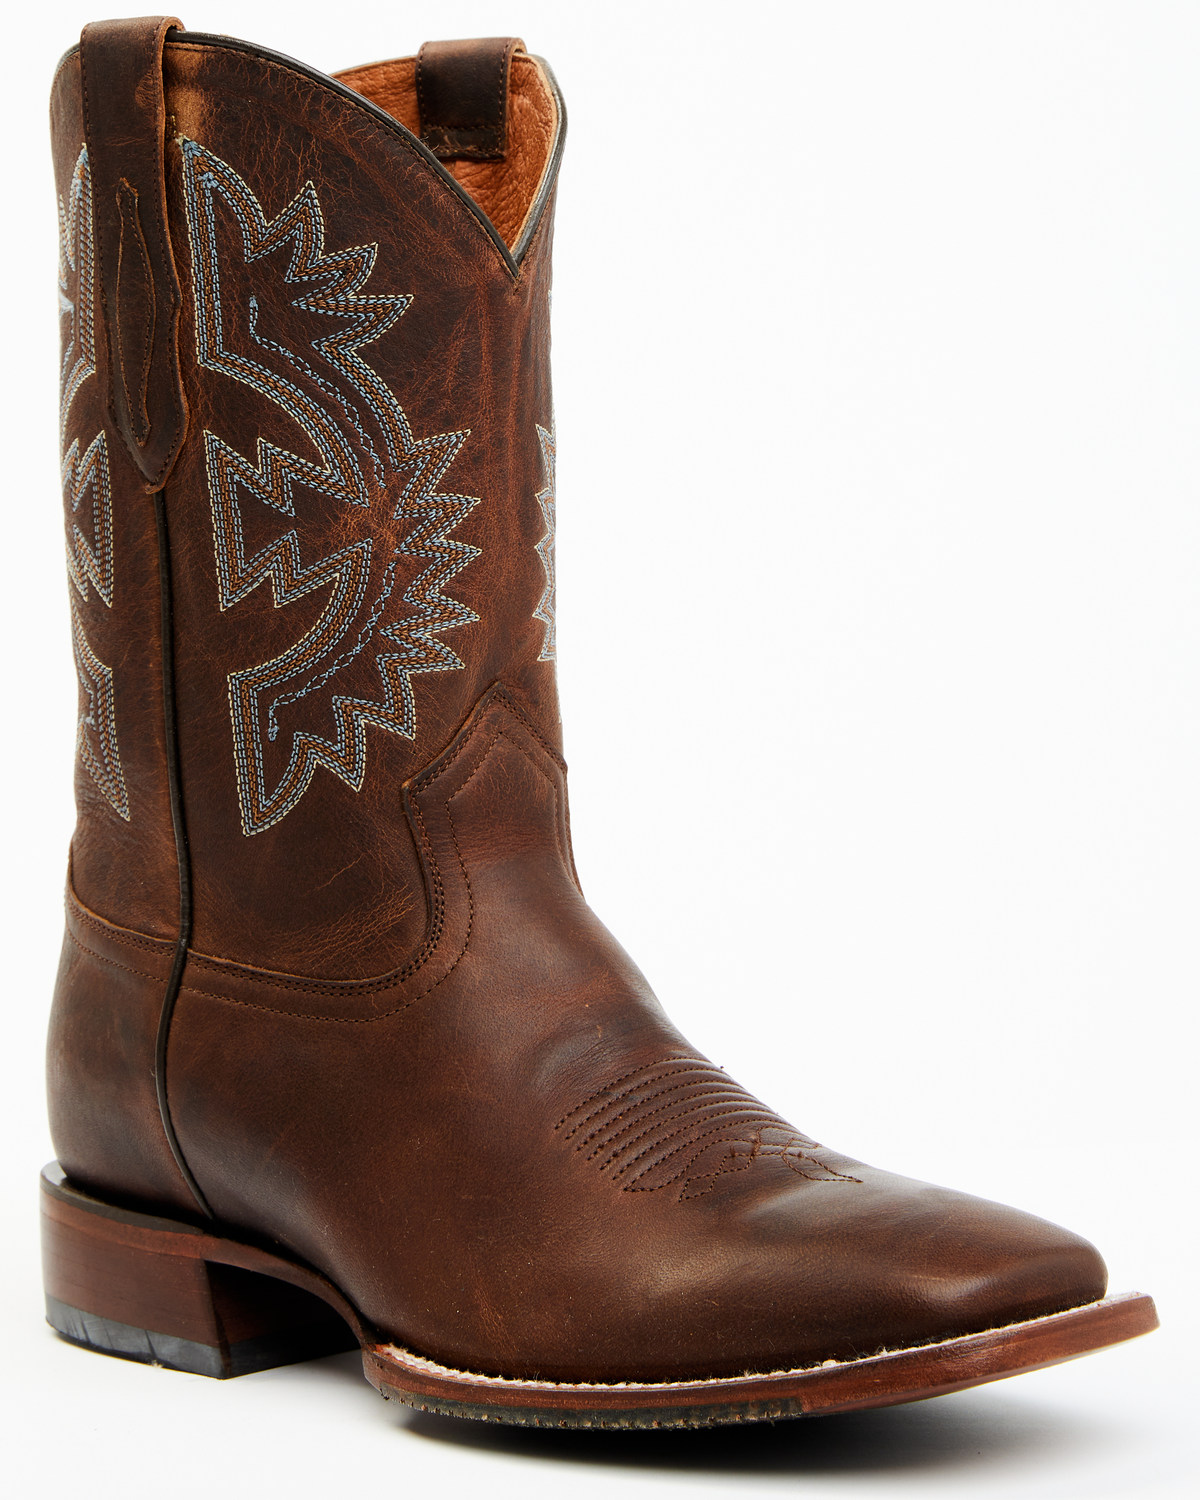 Cody James Men's Walnut Western Boots - Broad Square Toe